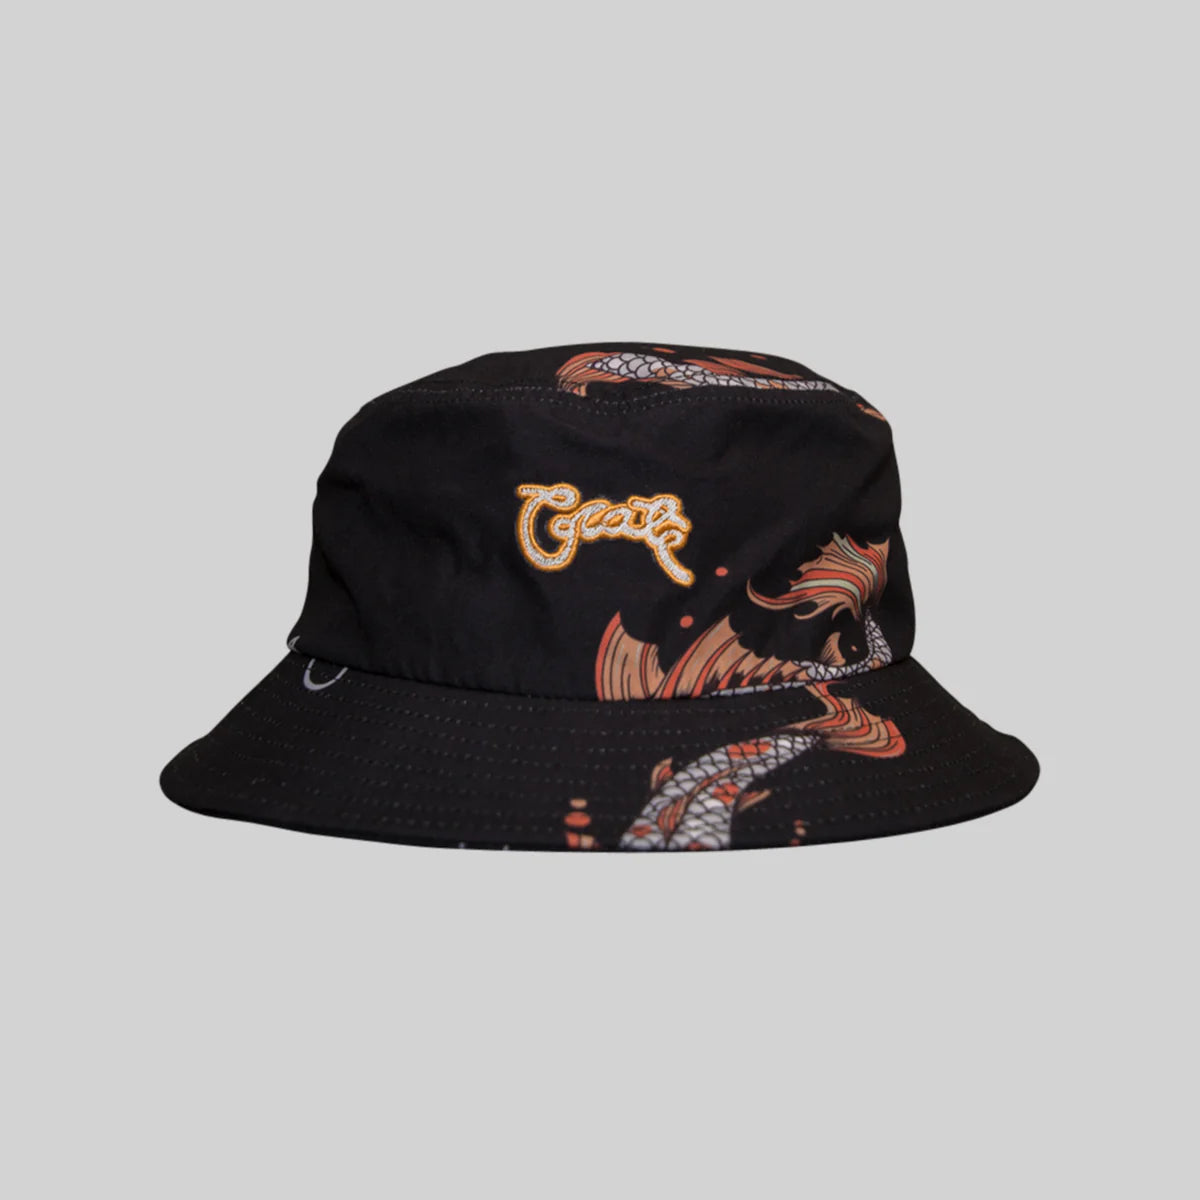 Crate Koi Fish Bucket Hat - Black